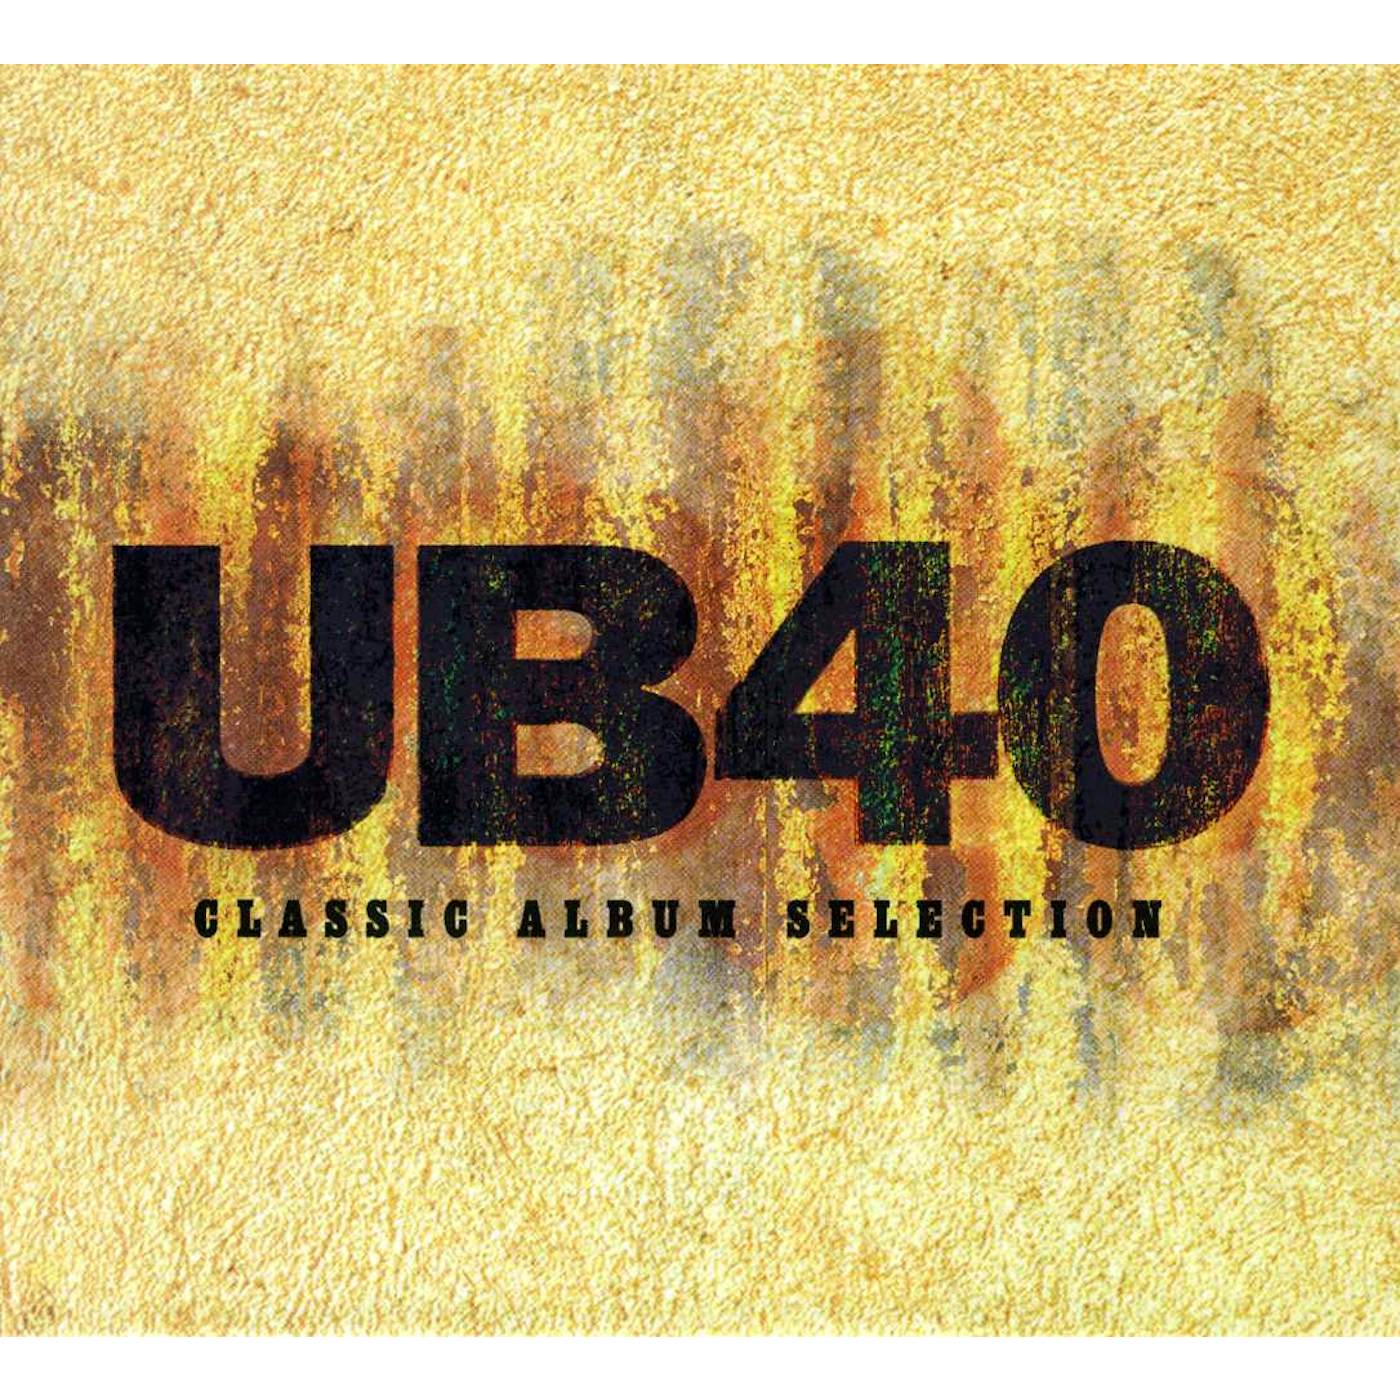 UB40 CLASSIC ALBUM SELECTION CD